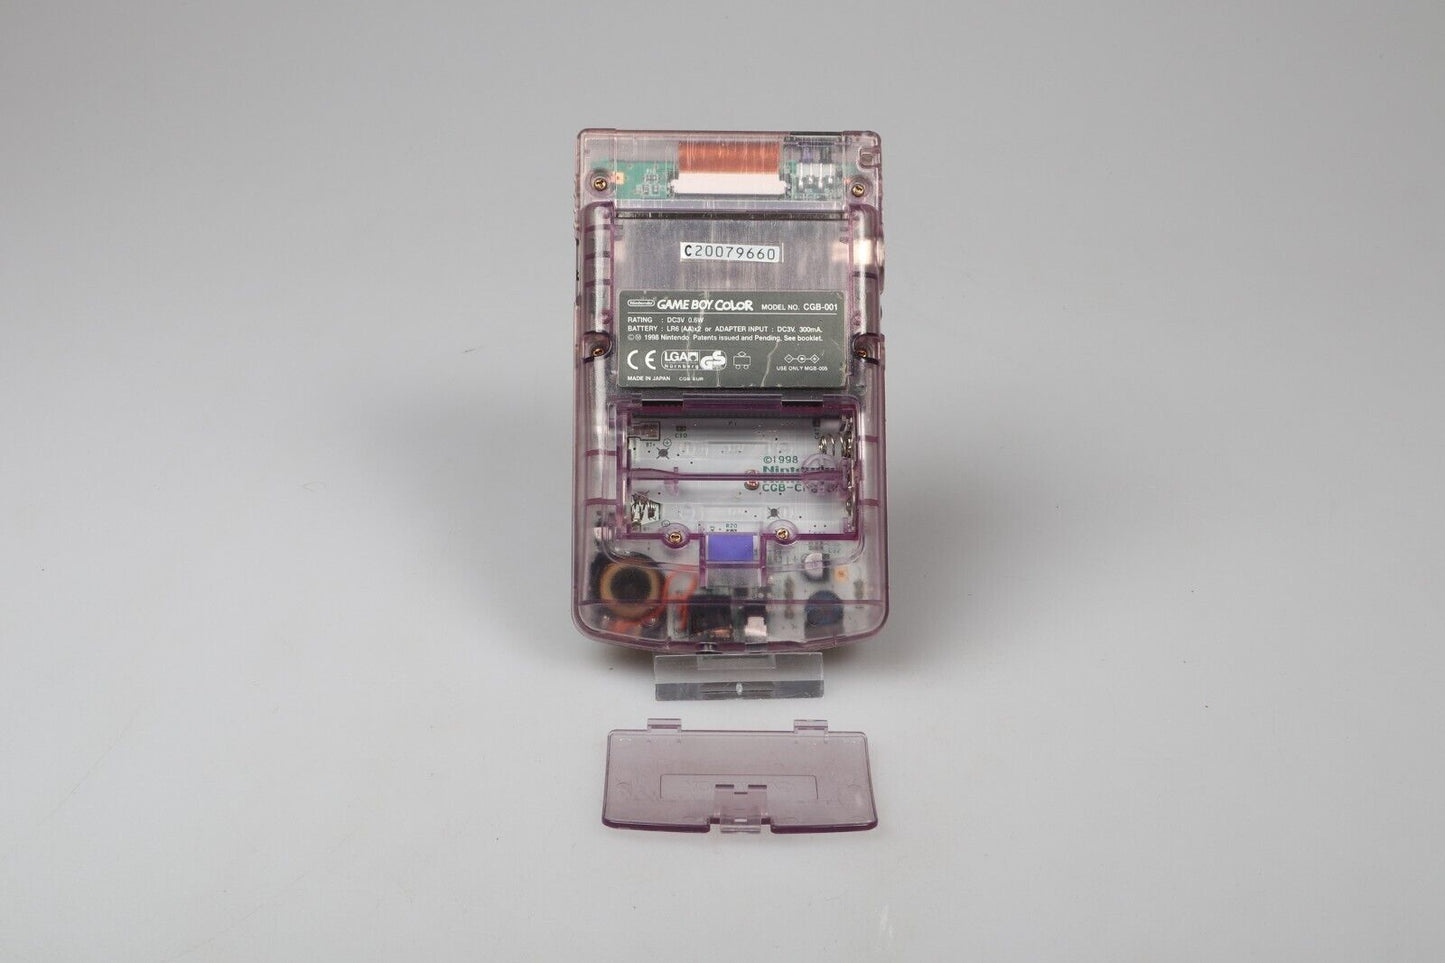 Game Boy Color | MGB-005 Handheld | Transparent Purple